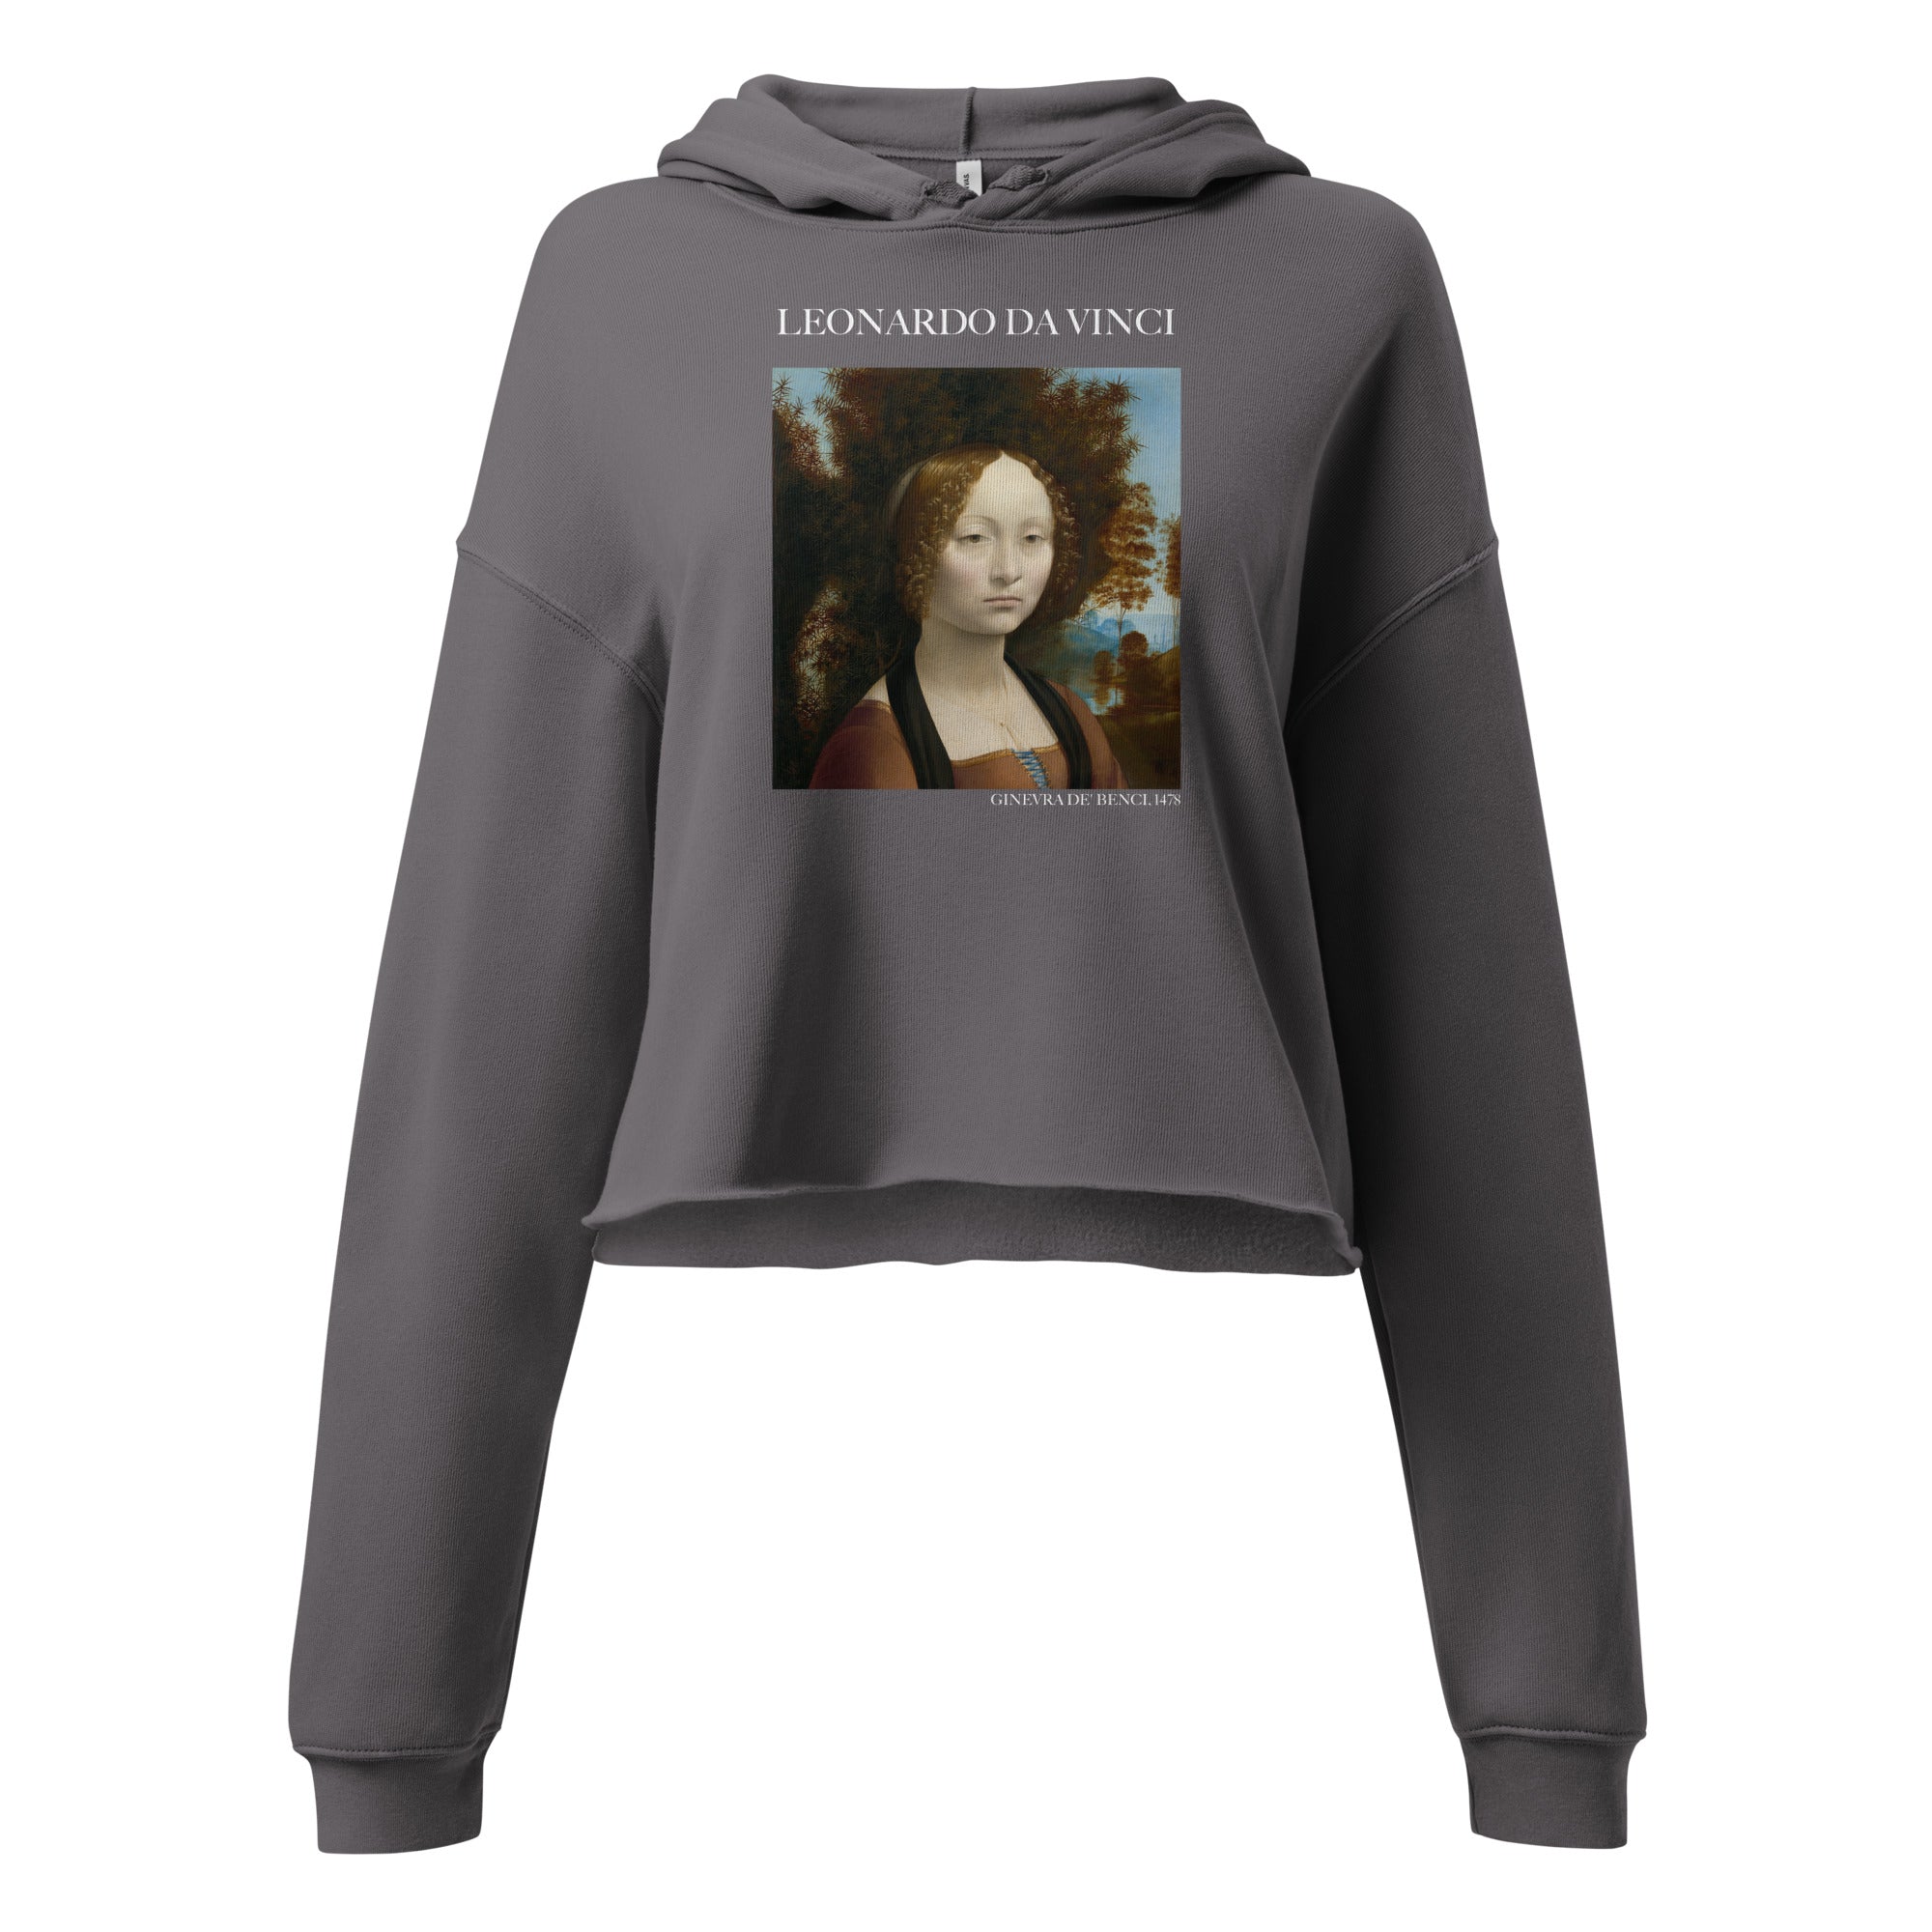 Leonardo da Vinci 'Ginevra de' Benci' Famous Painting Cropped Hoodie | Premium Art Cropped Hoodie